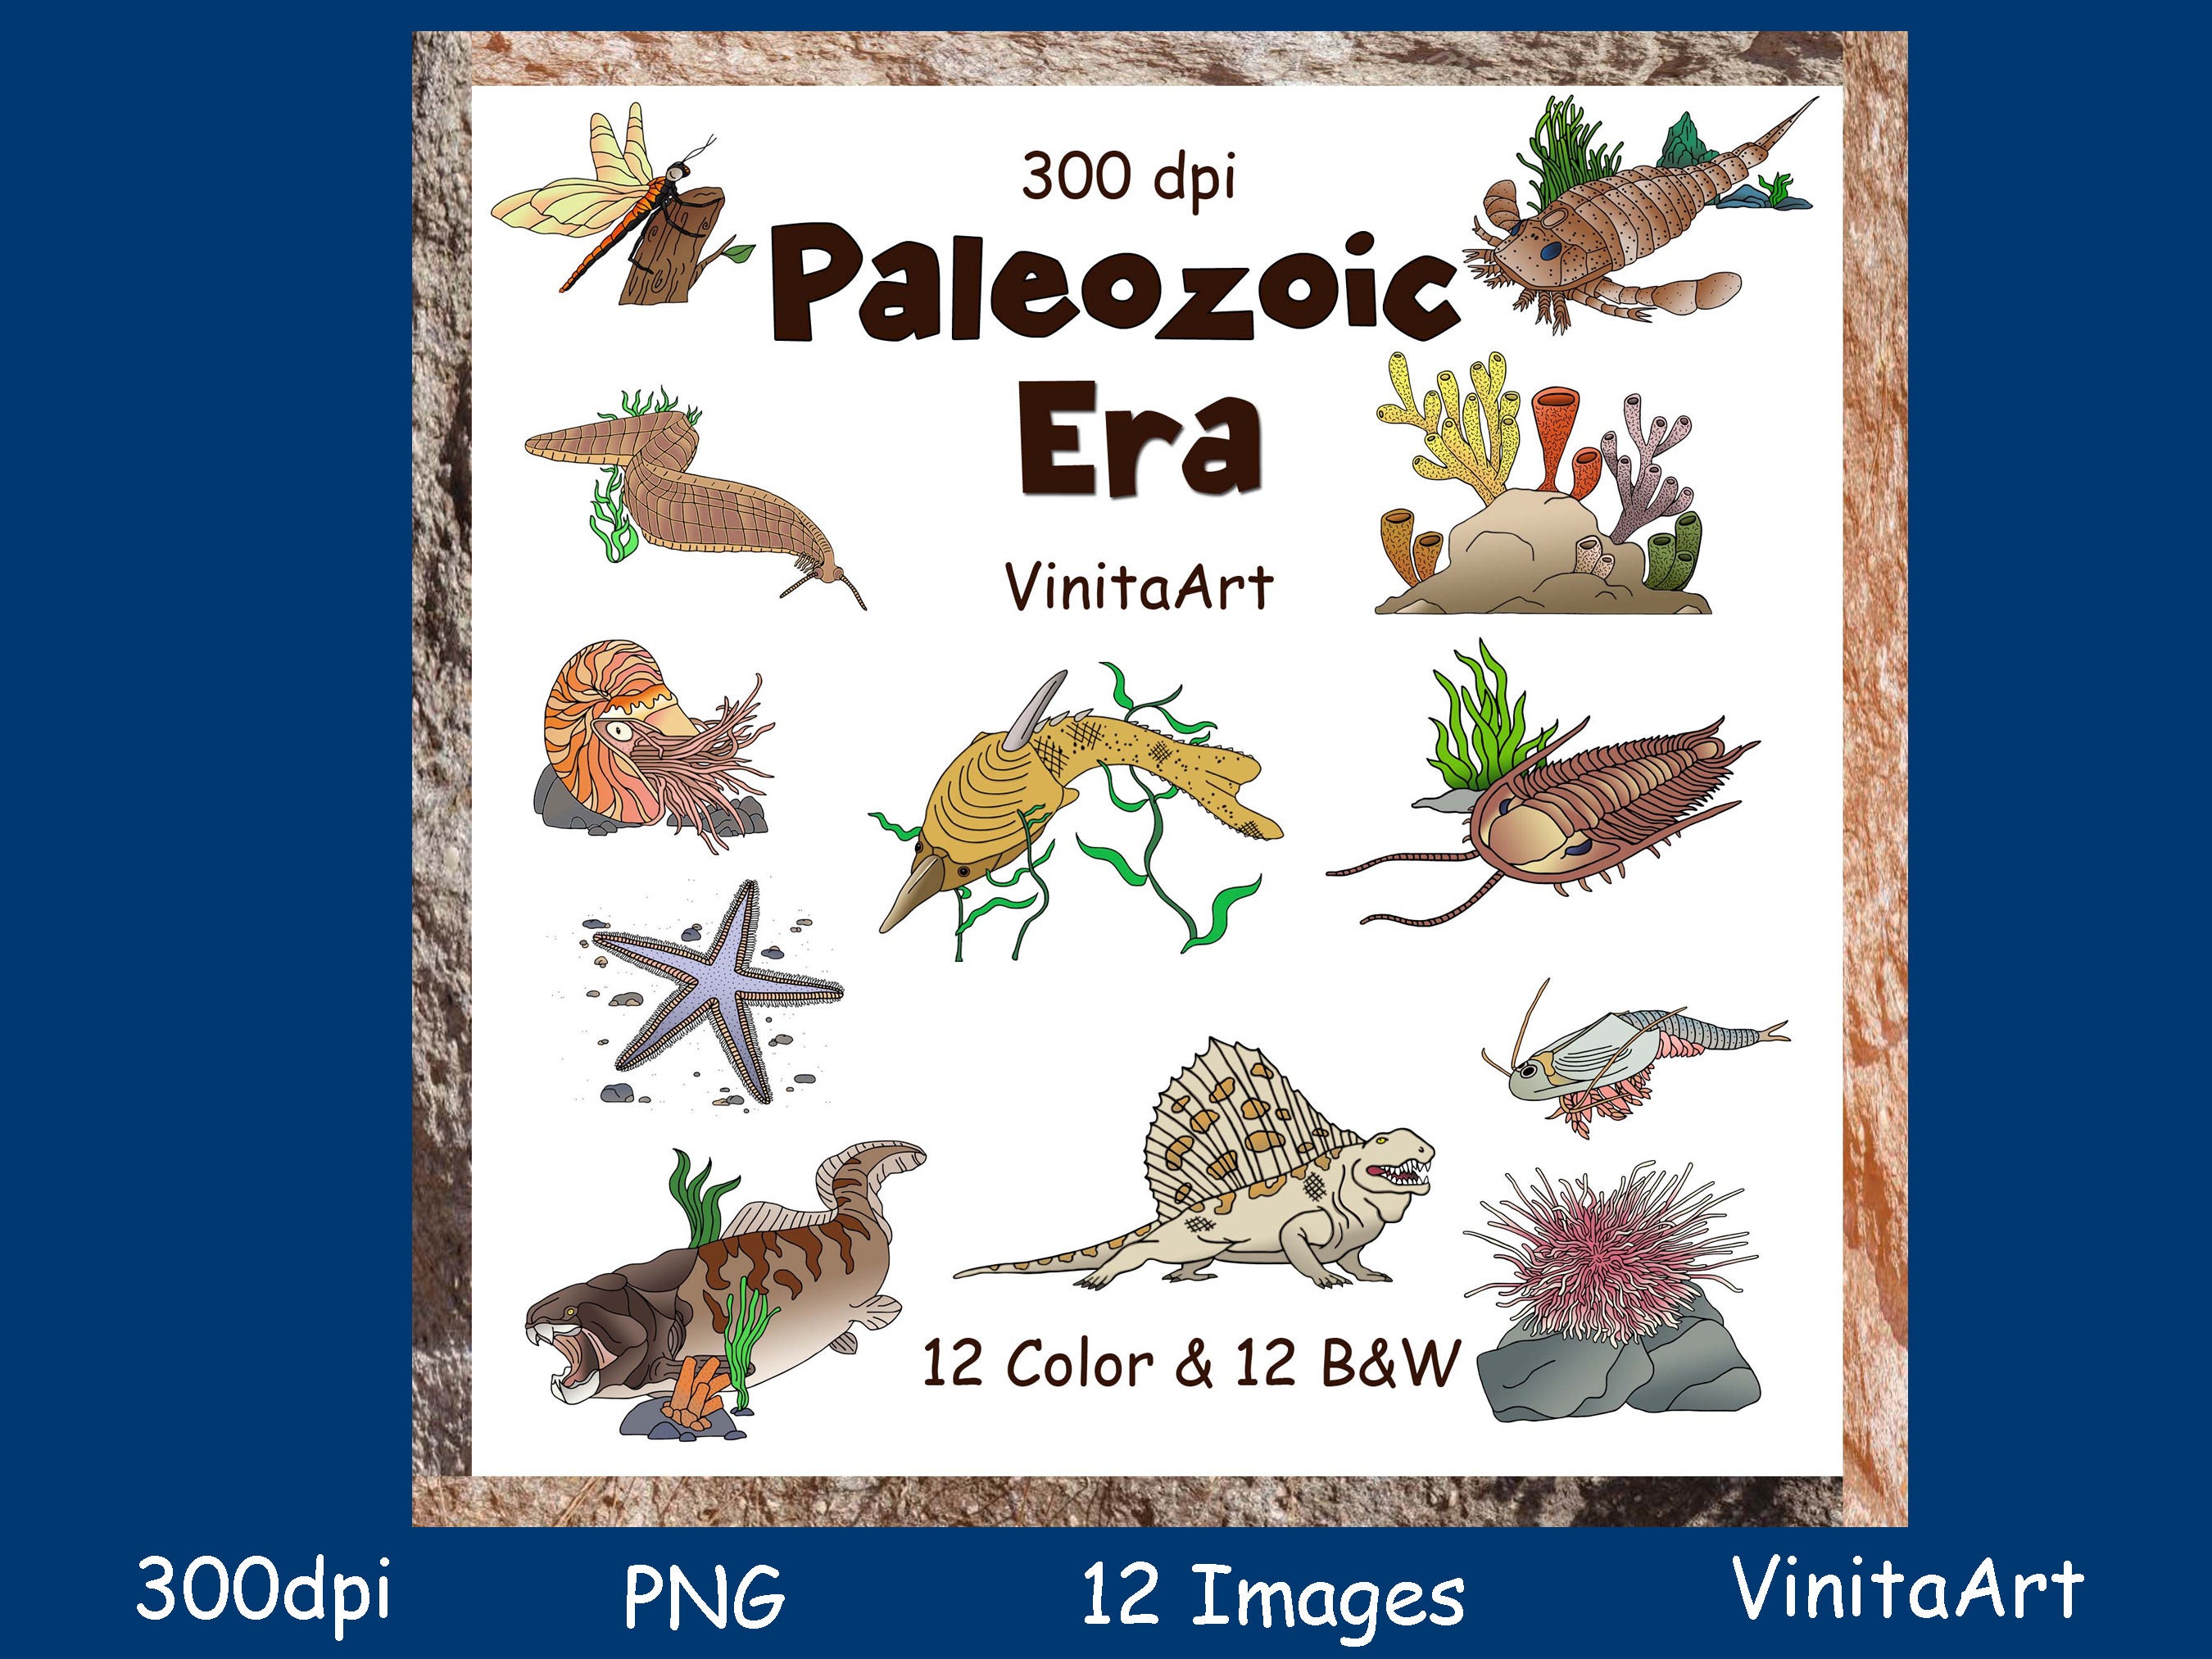 paleozoic era the beginning